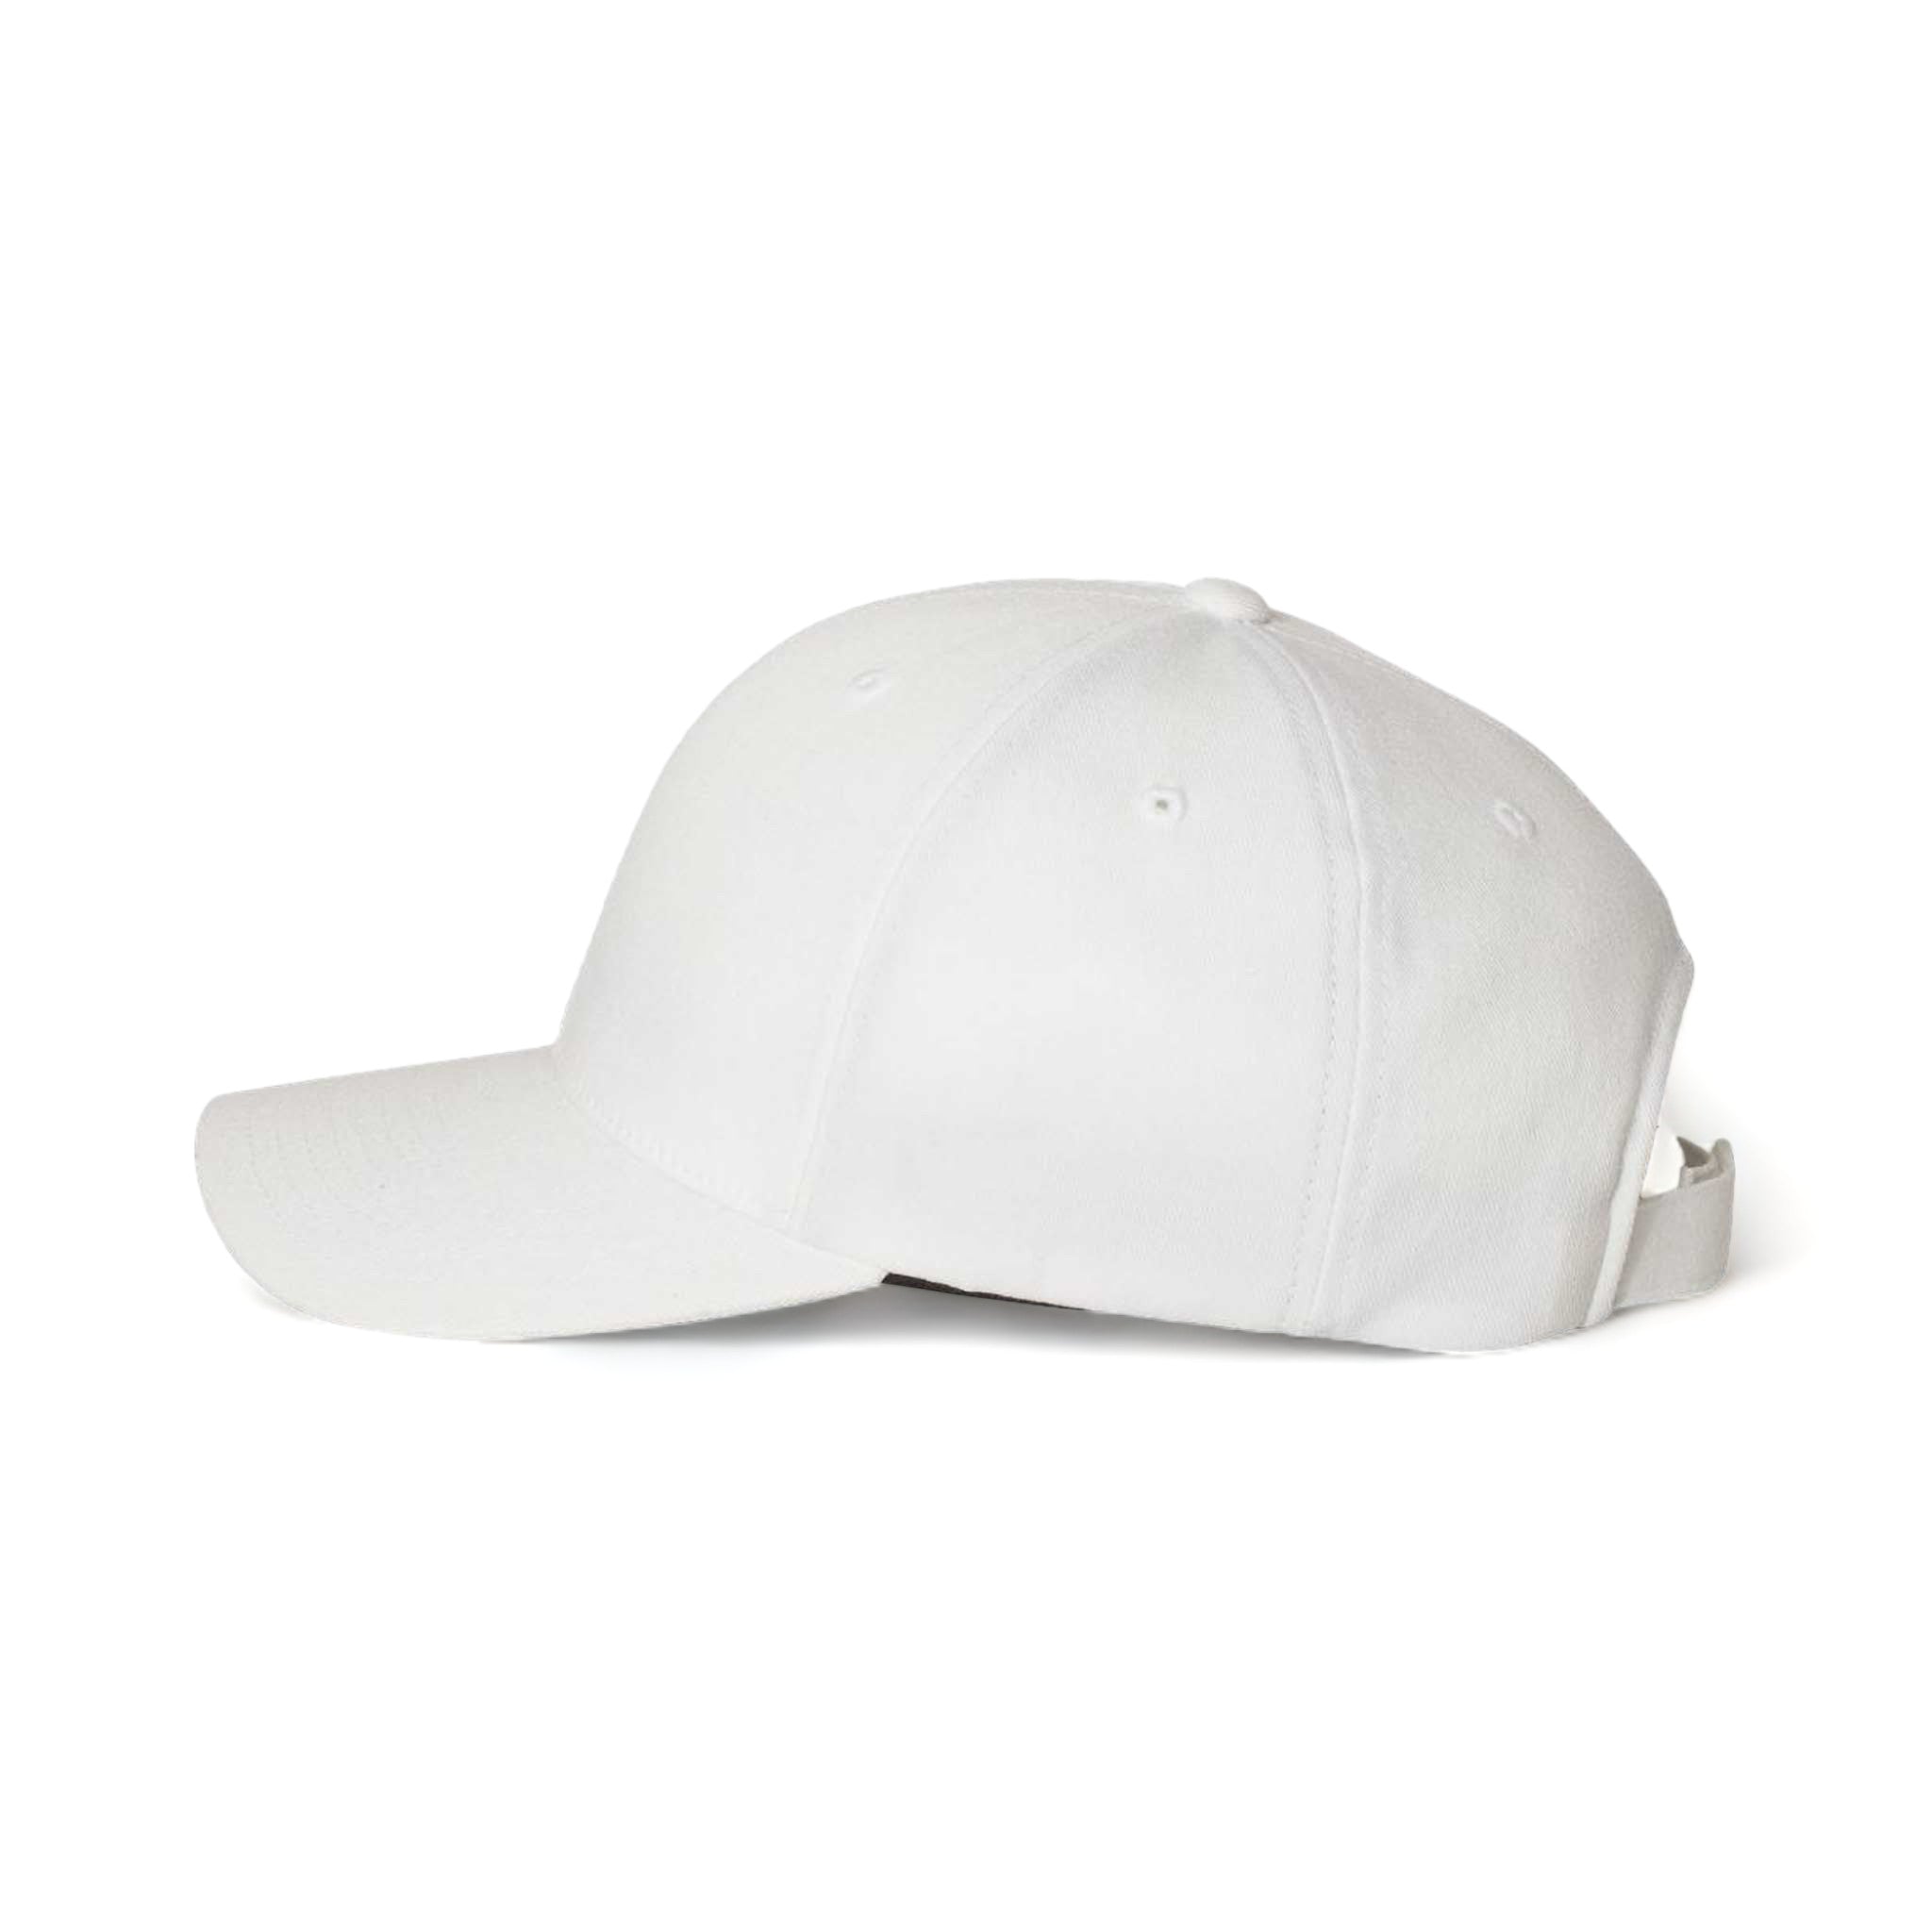 Side view of Flexfit 110C custom hat in white